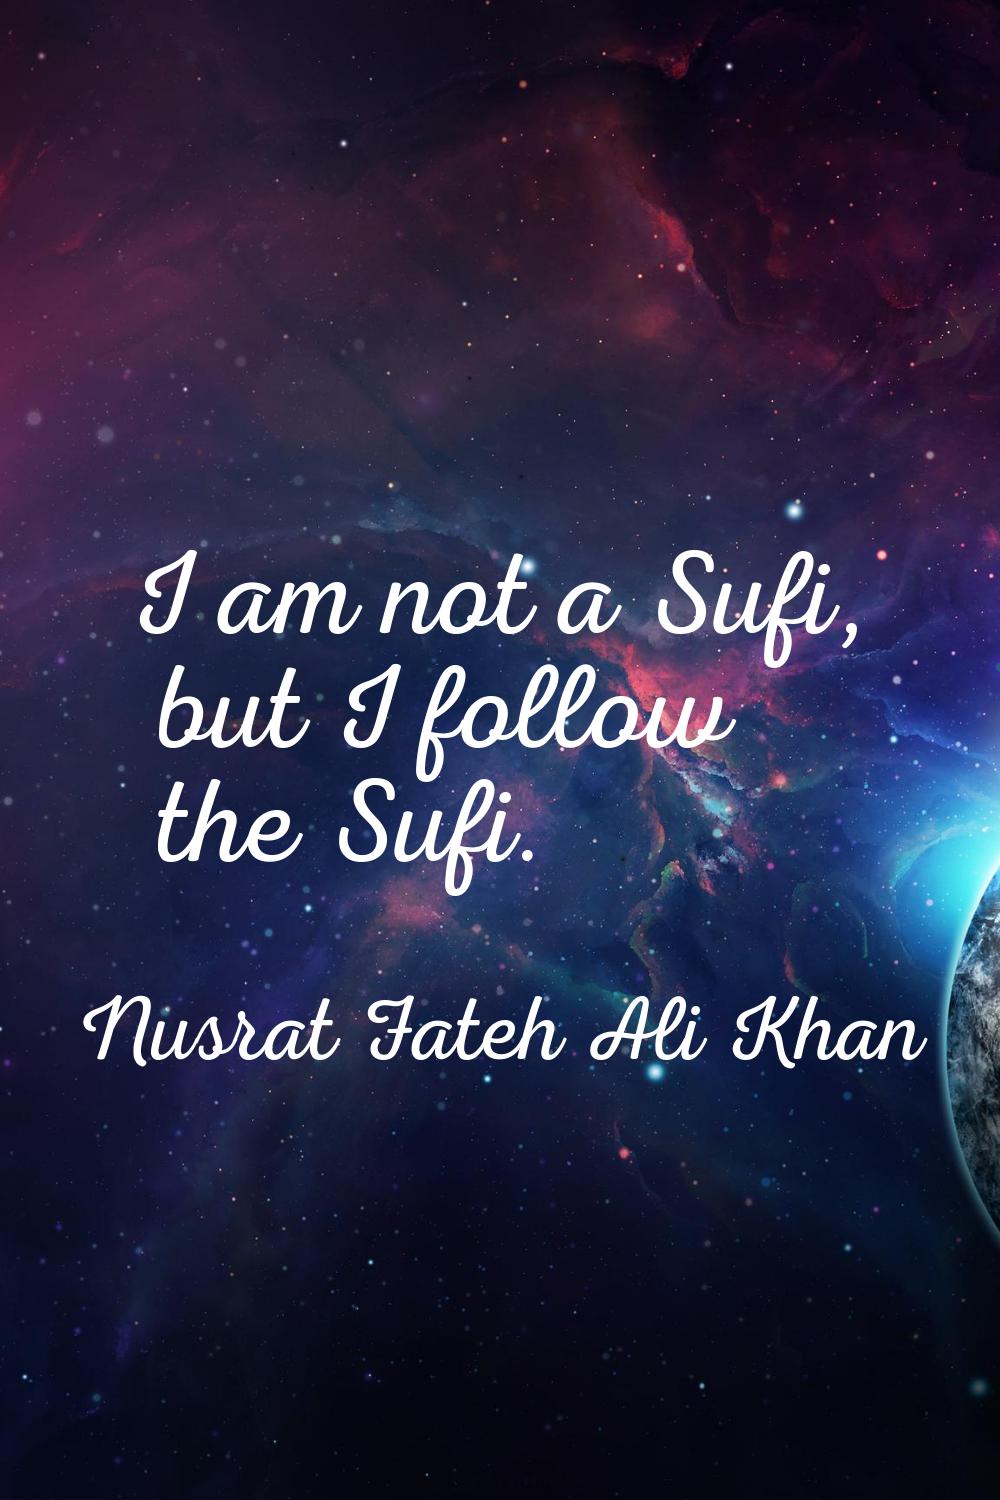 I am not a Sufi, but I follow the Sufi.